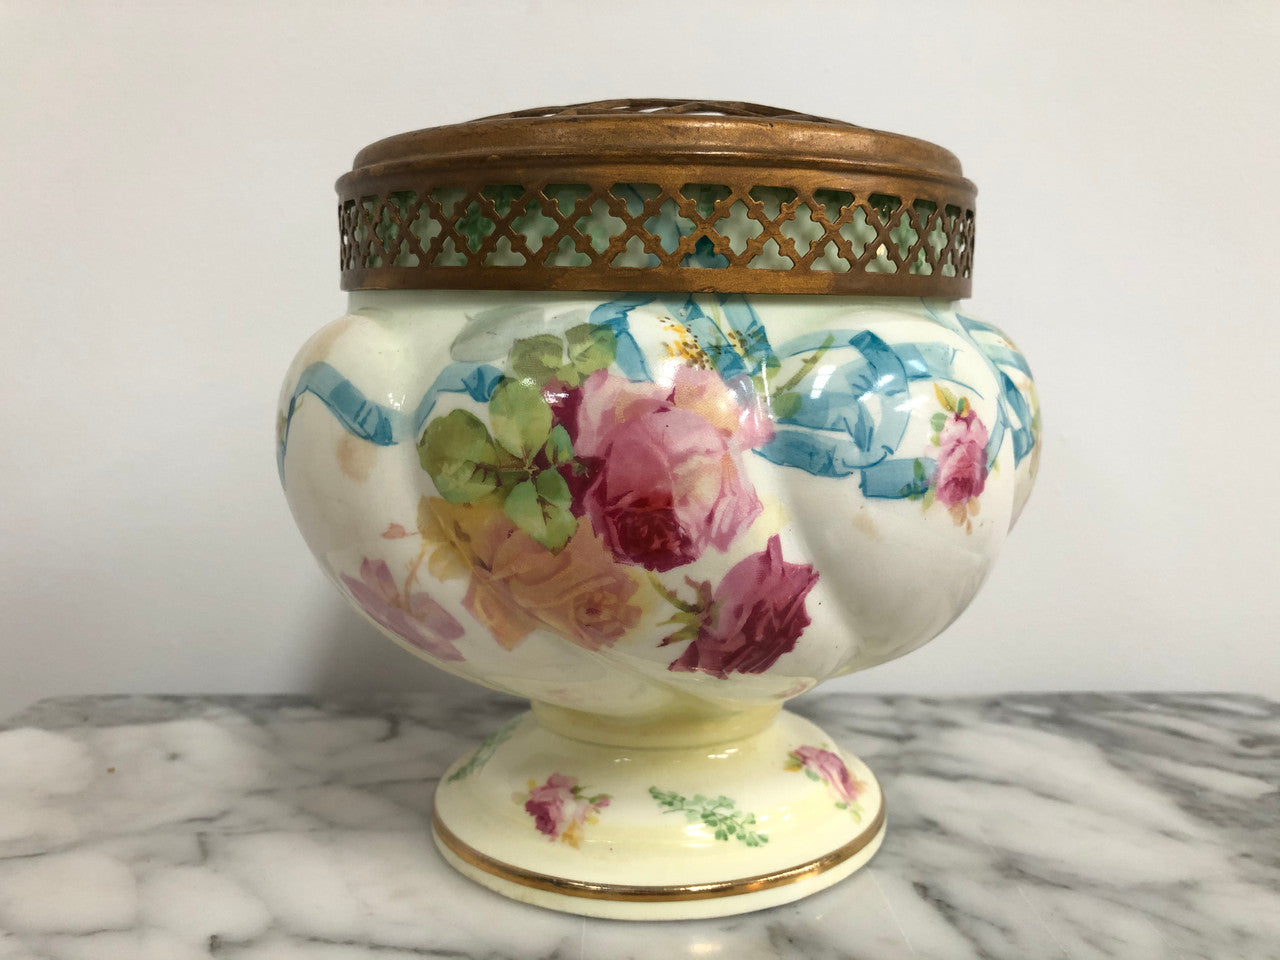 Beautiful Royal Doulton Posy bowl